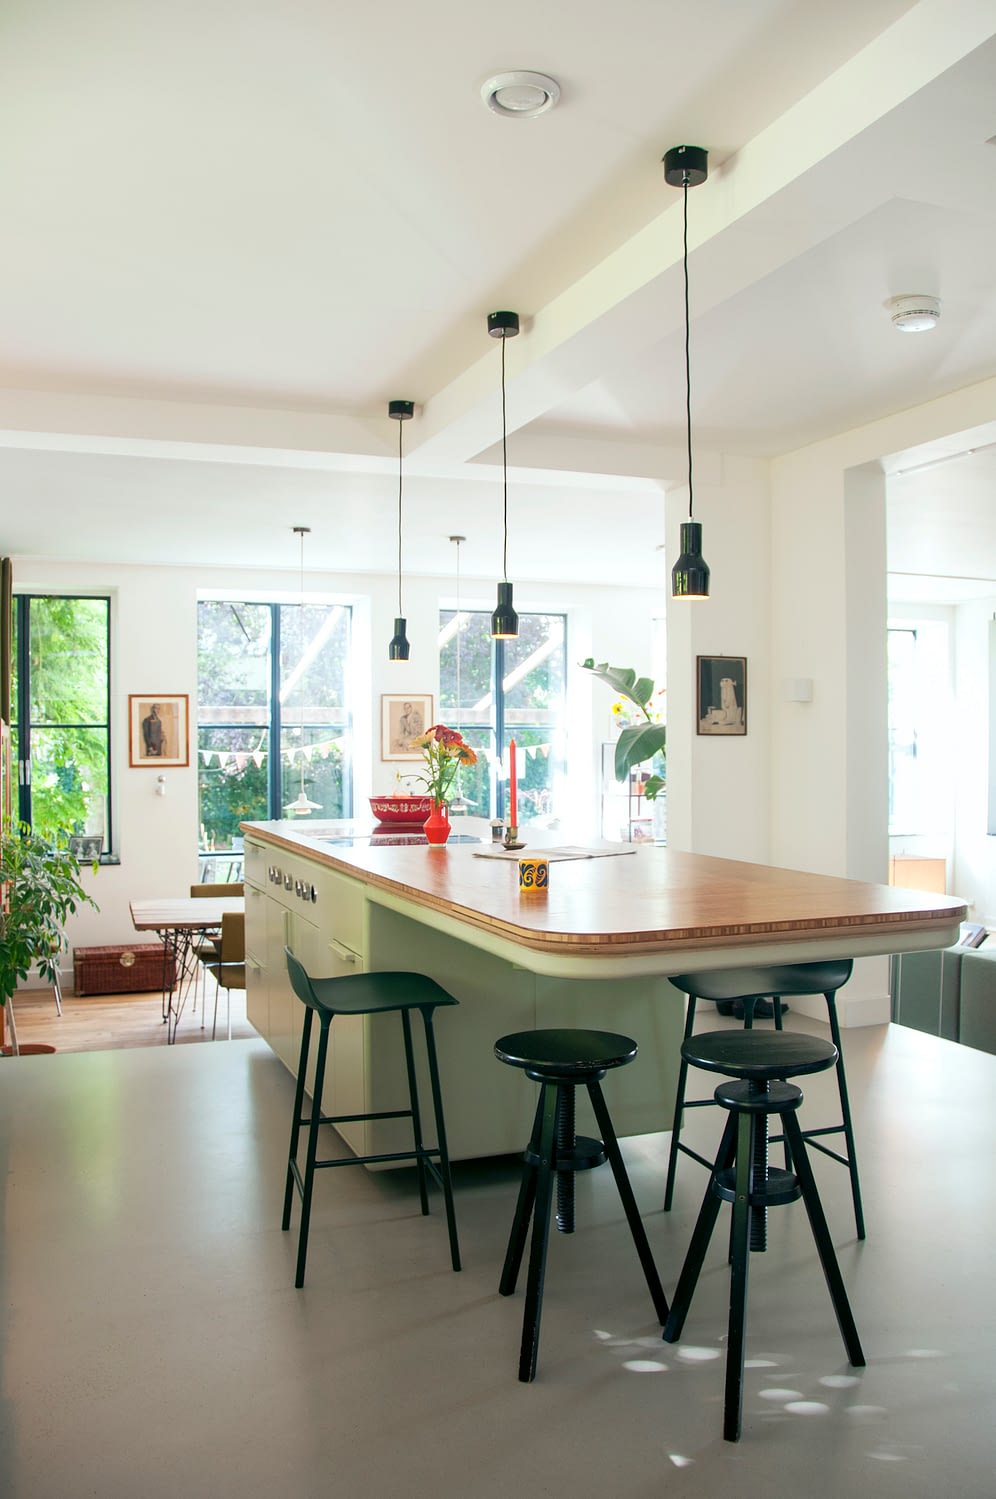 Studio Brandvries | circulair renovatie huis rotterdam door architectenbureau rotterdam